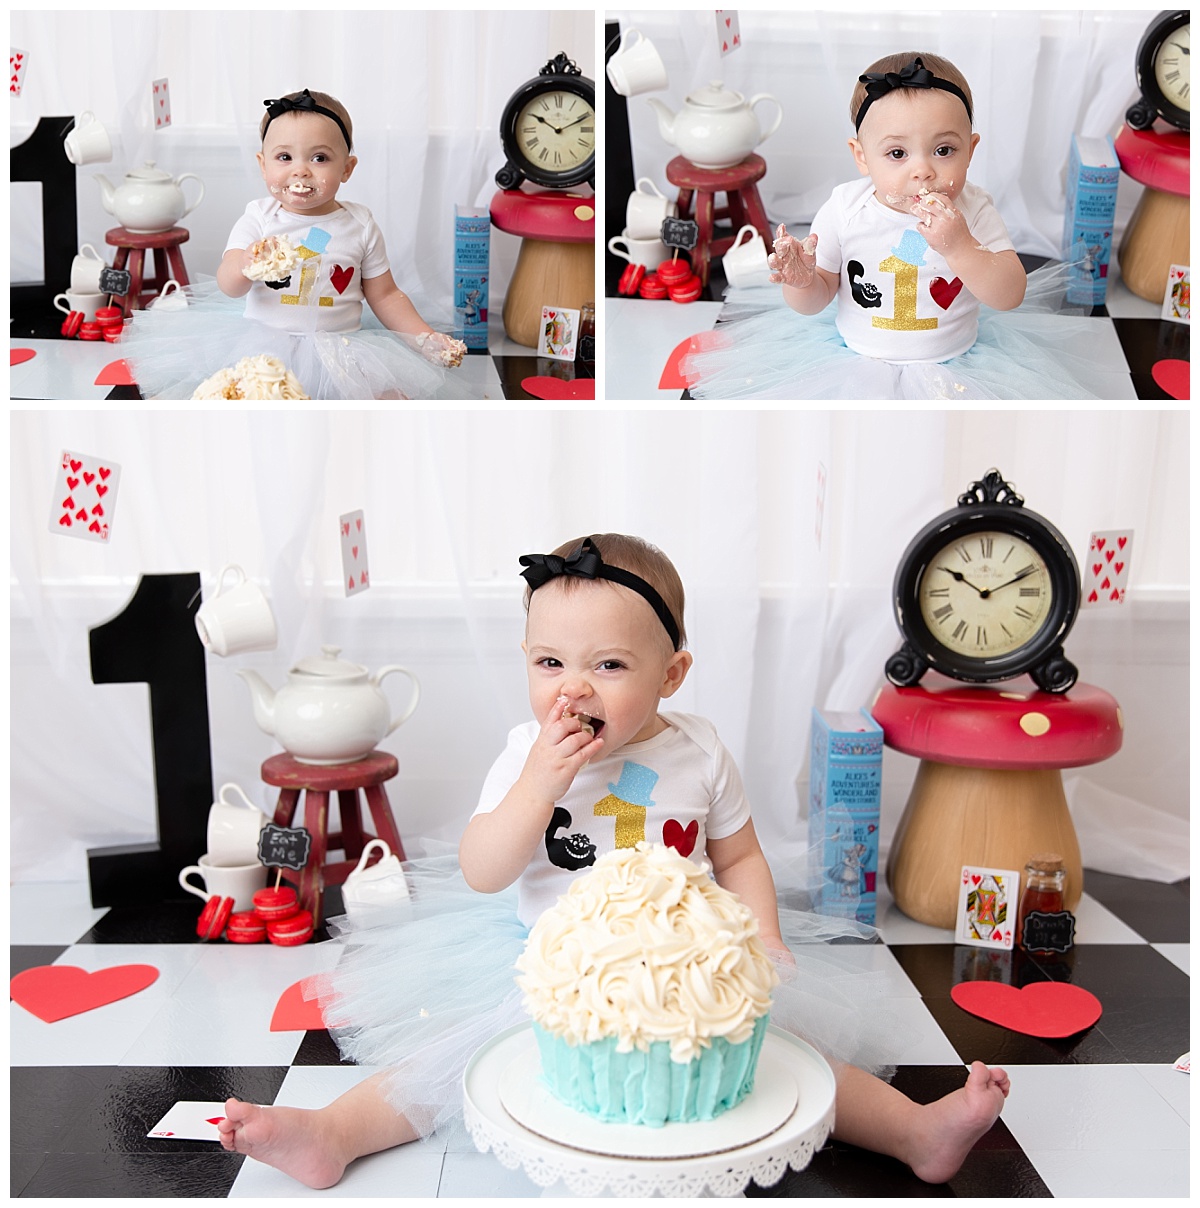 st-louis-cake-smash-photographer-alice-in-wonderland-cake-smash-baby-girl-collage-eating-cake.jpg